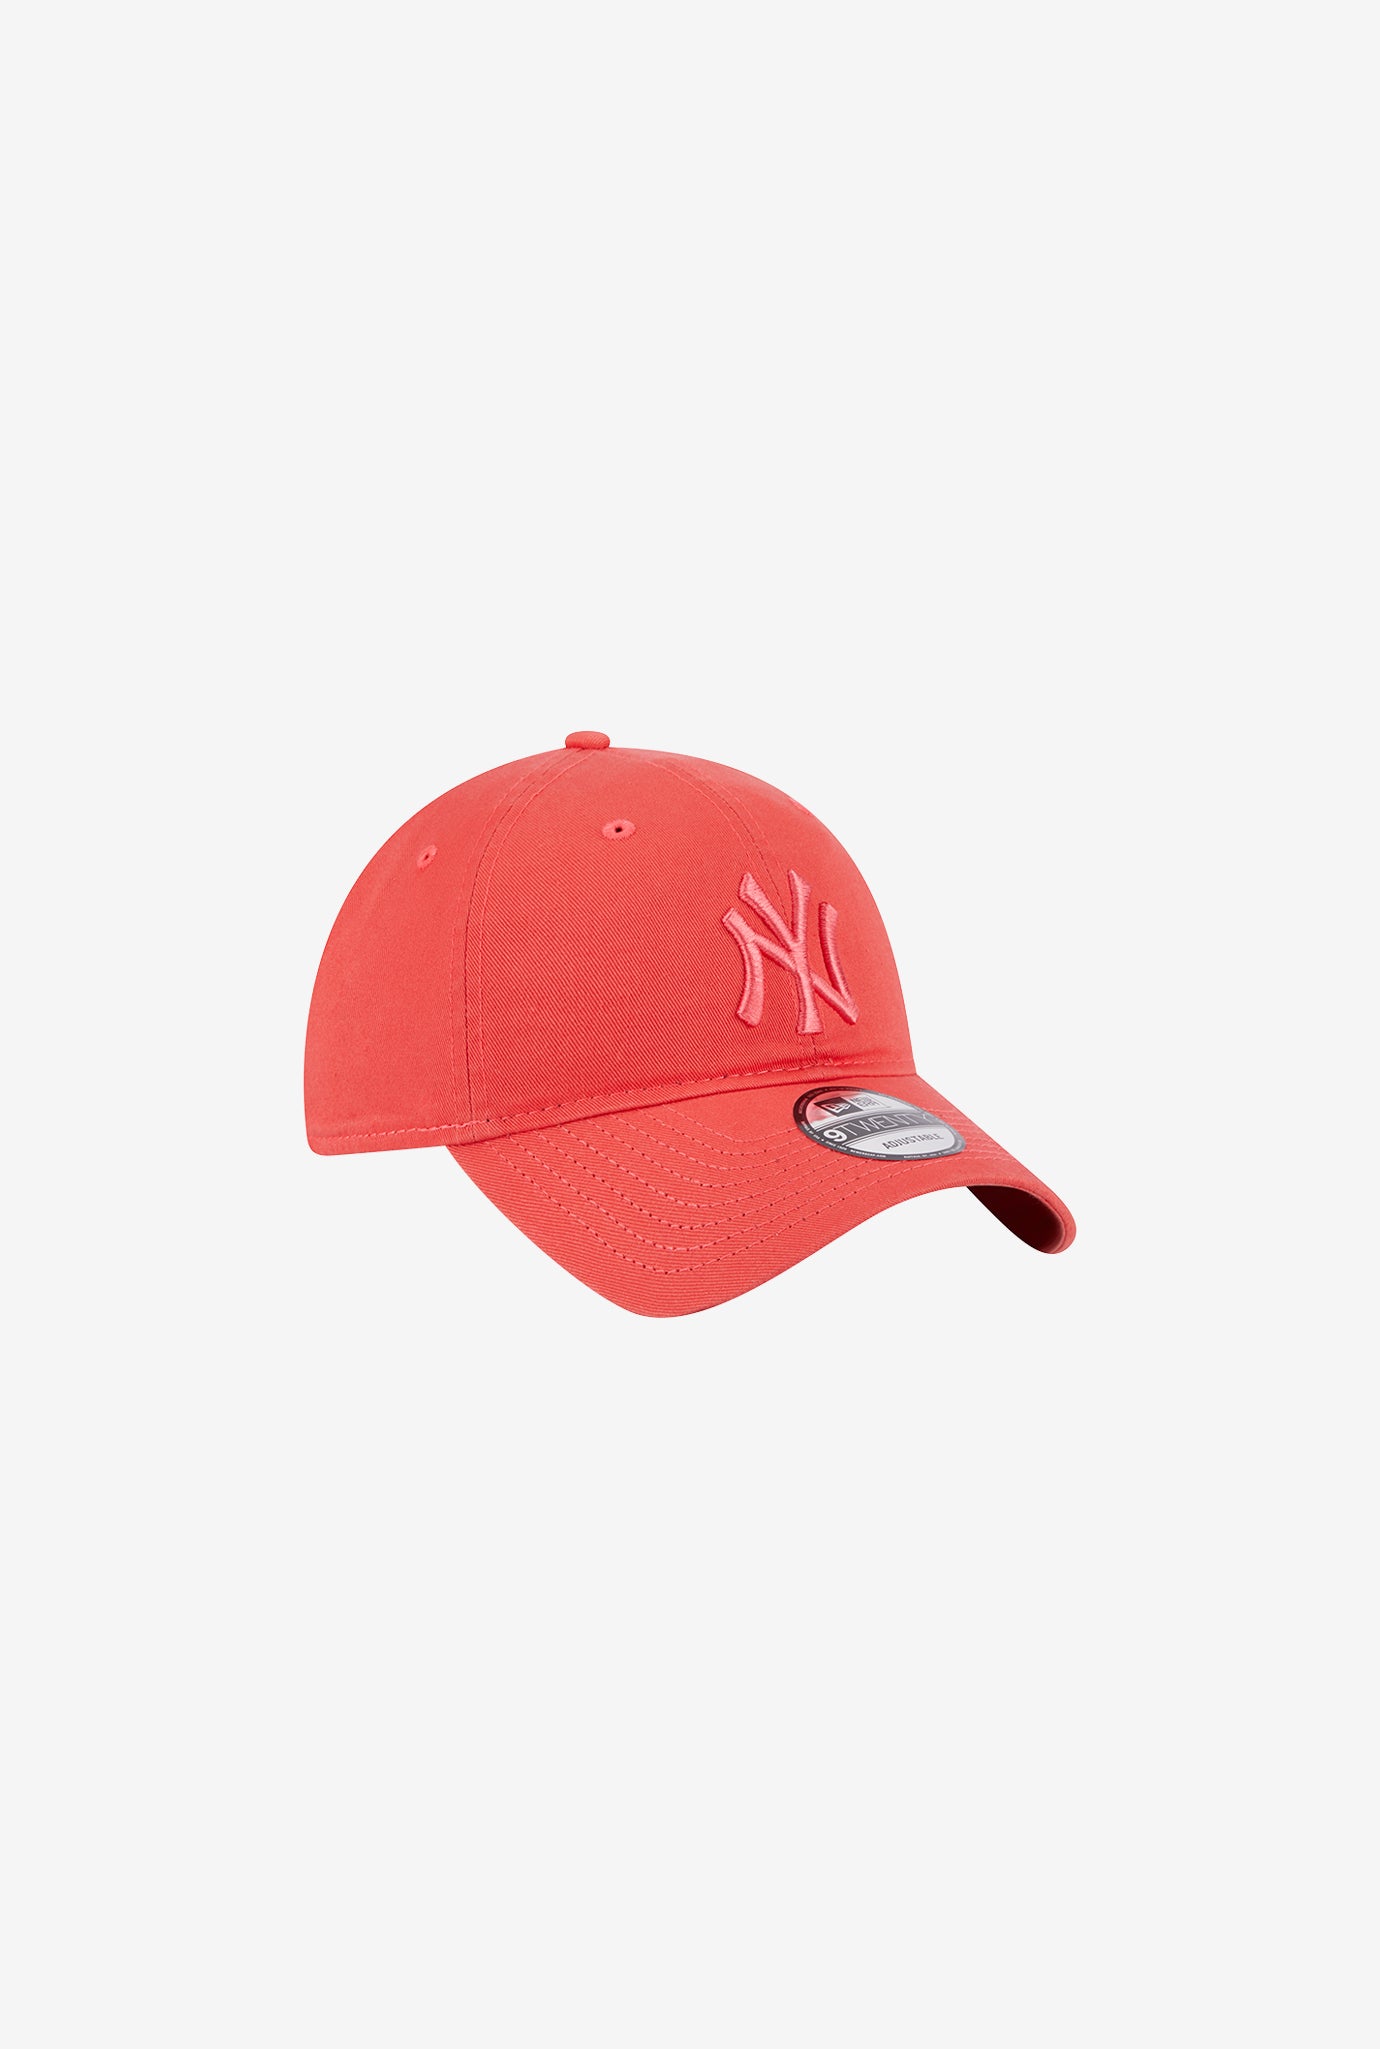 New York Yankees 9TWENTY Color Pack - Neon Red